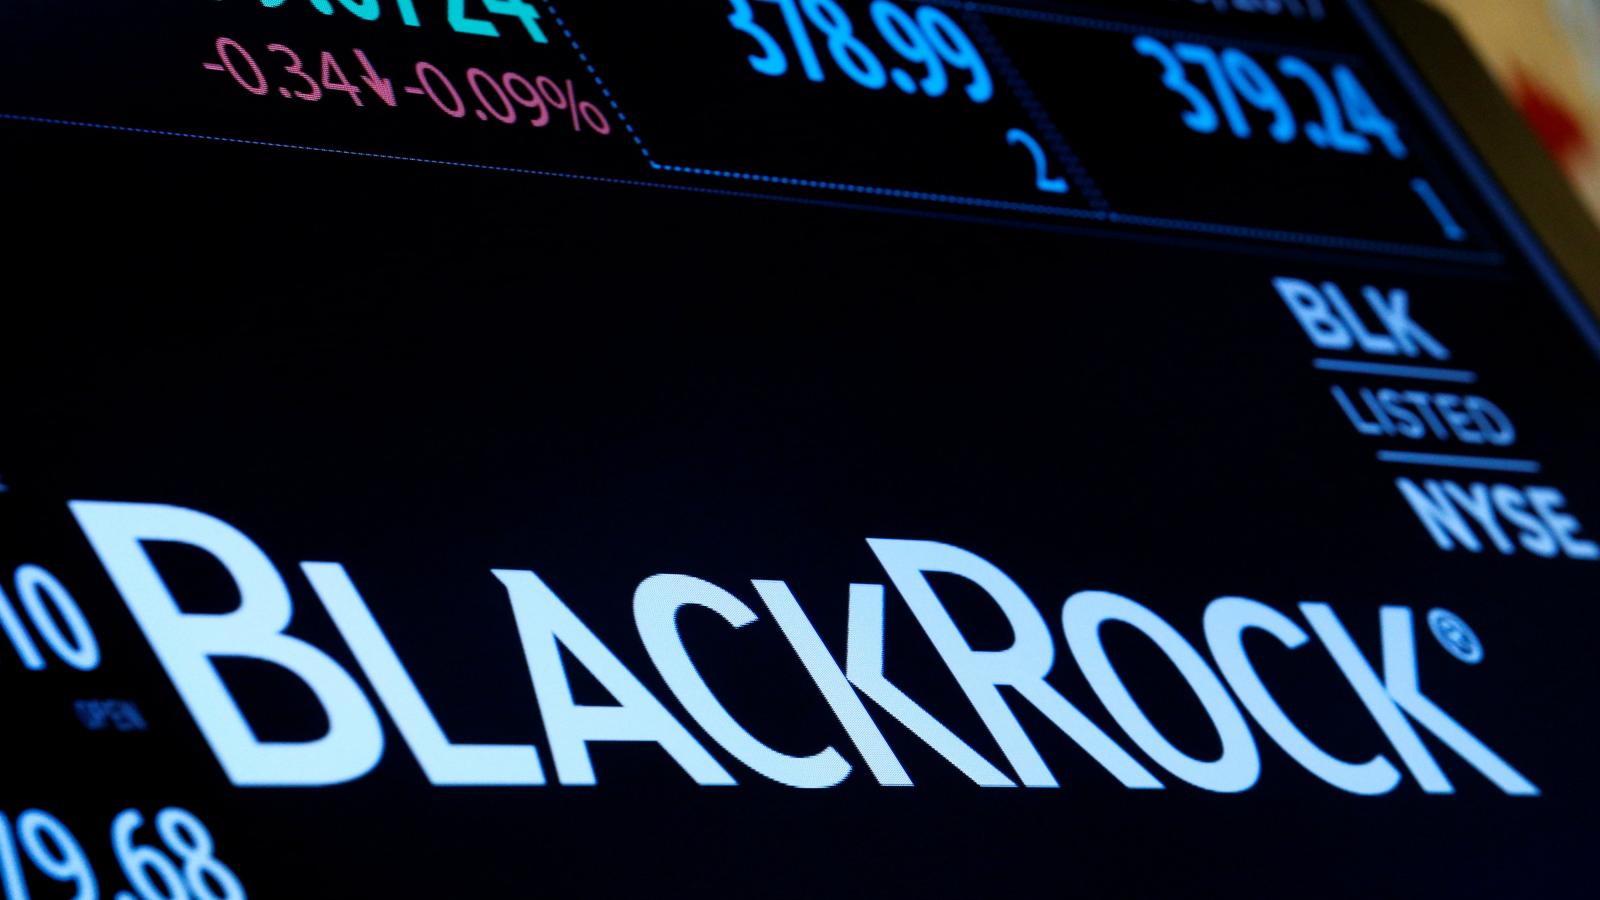 blackrock logo - کمپانی BlackRock در معاملات آتی بیت کوین سرمایه گذاری می کند